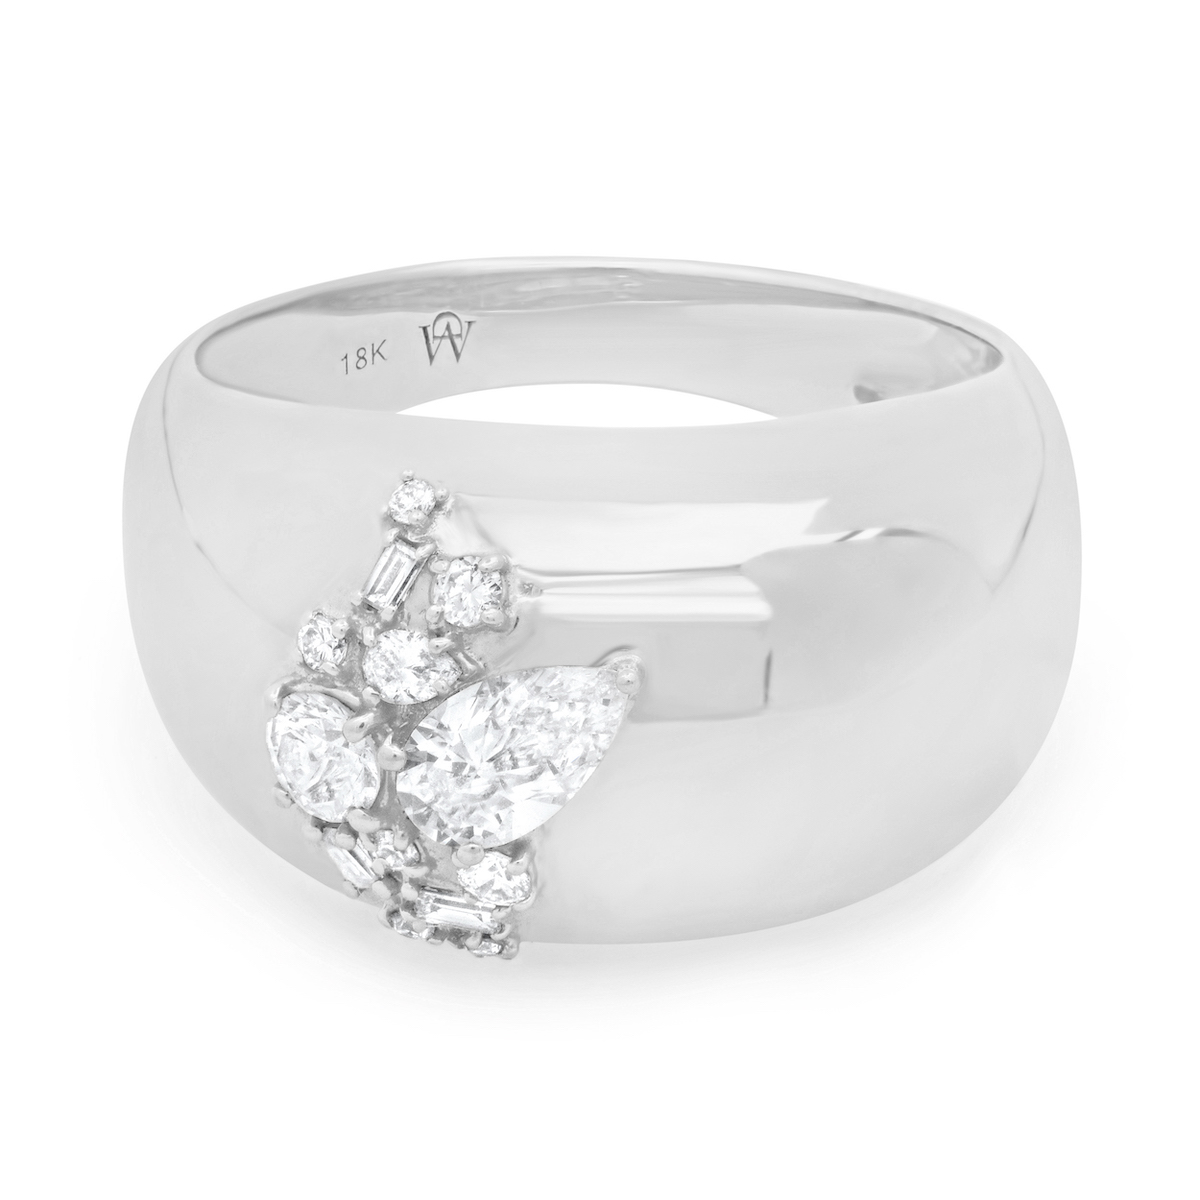 gemist dorian webb diamond jewelry trellis dome ring